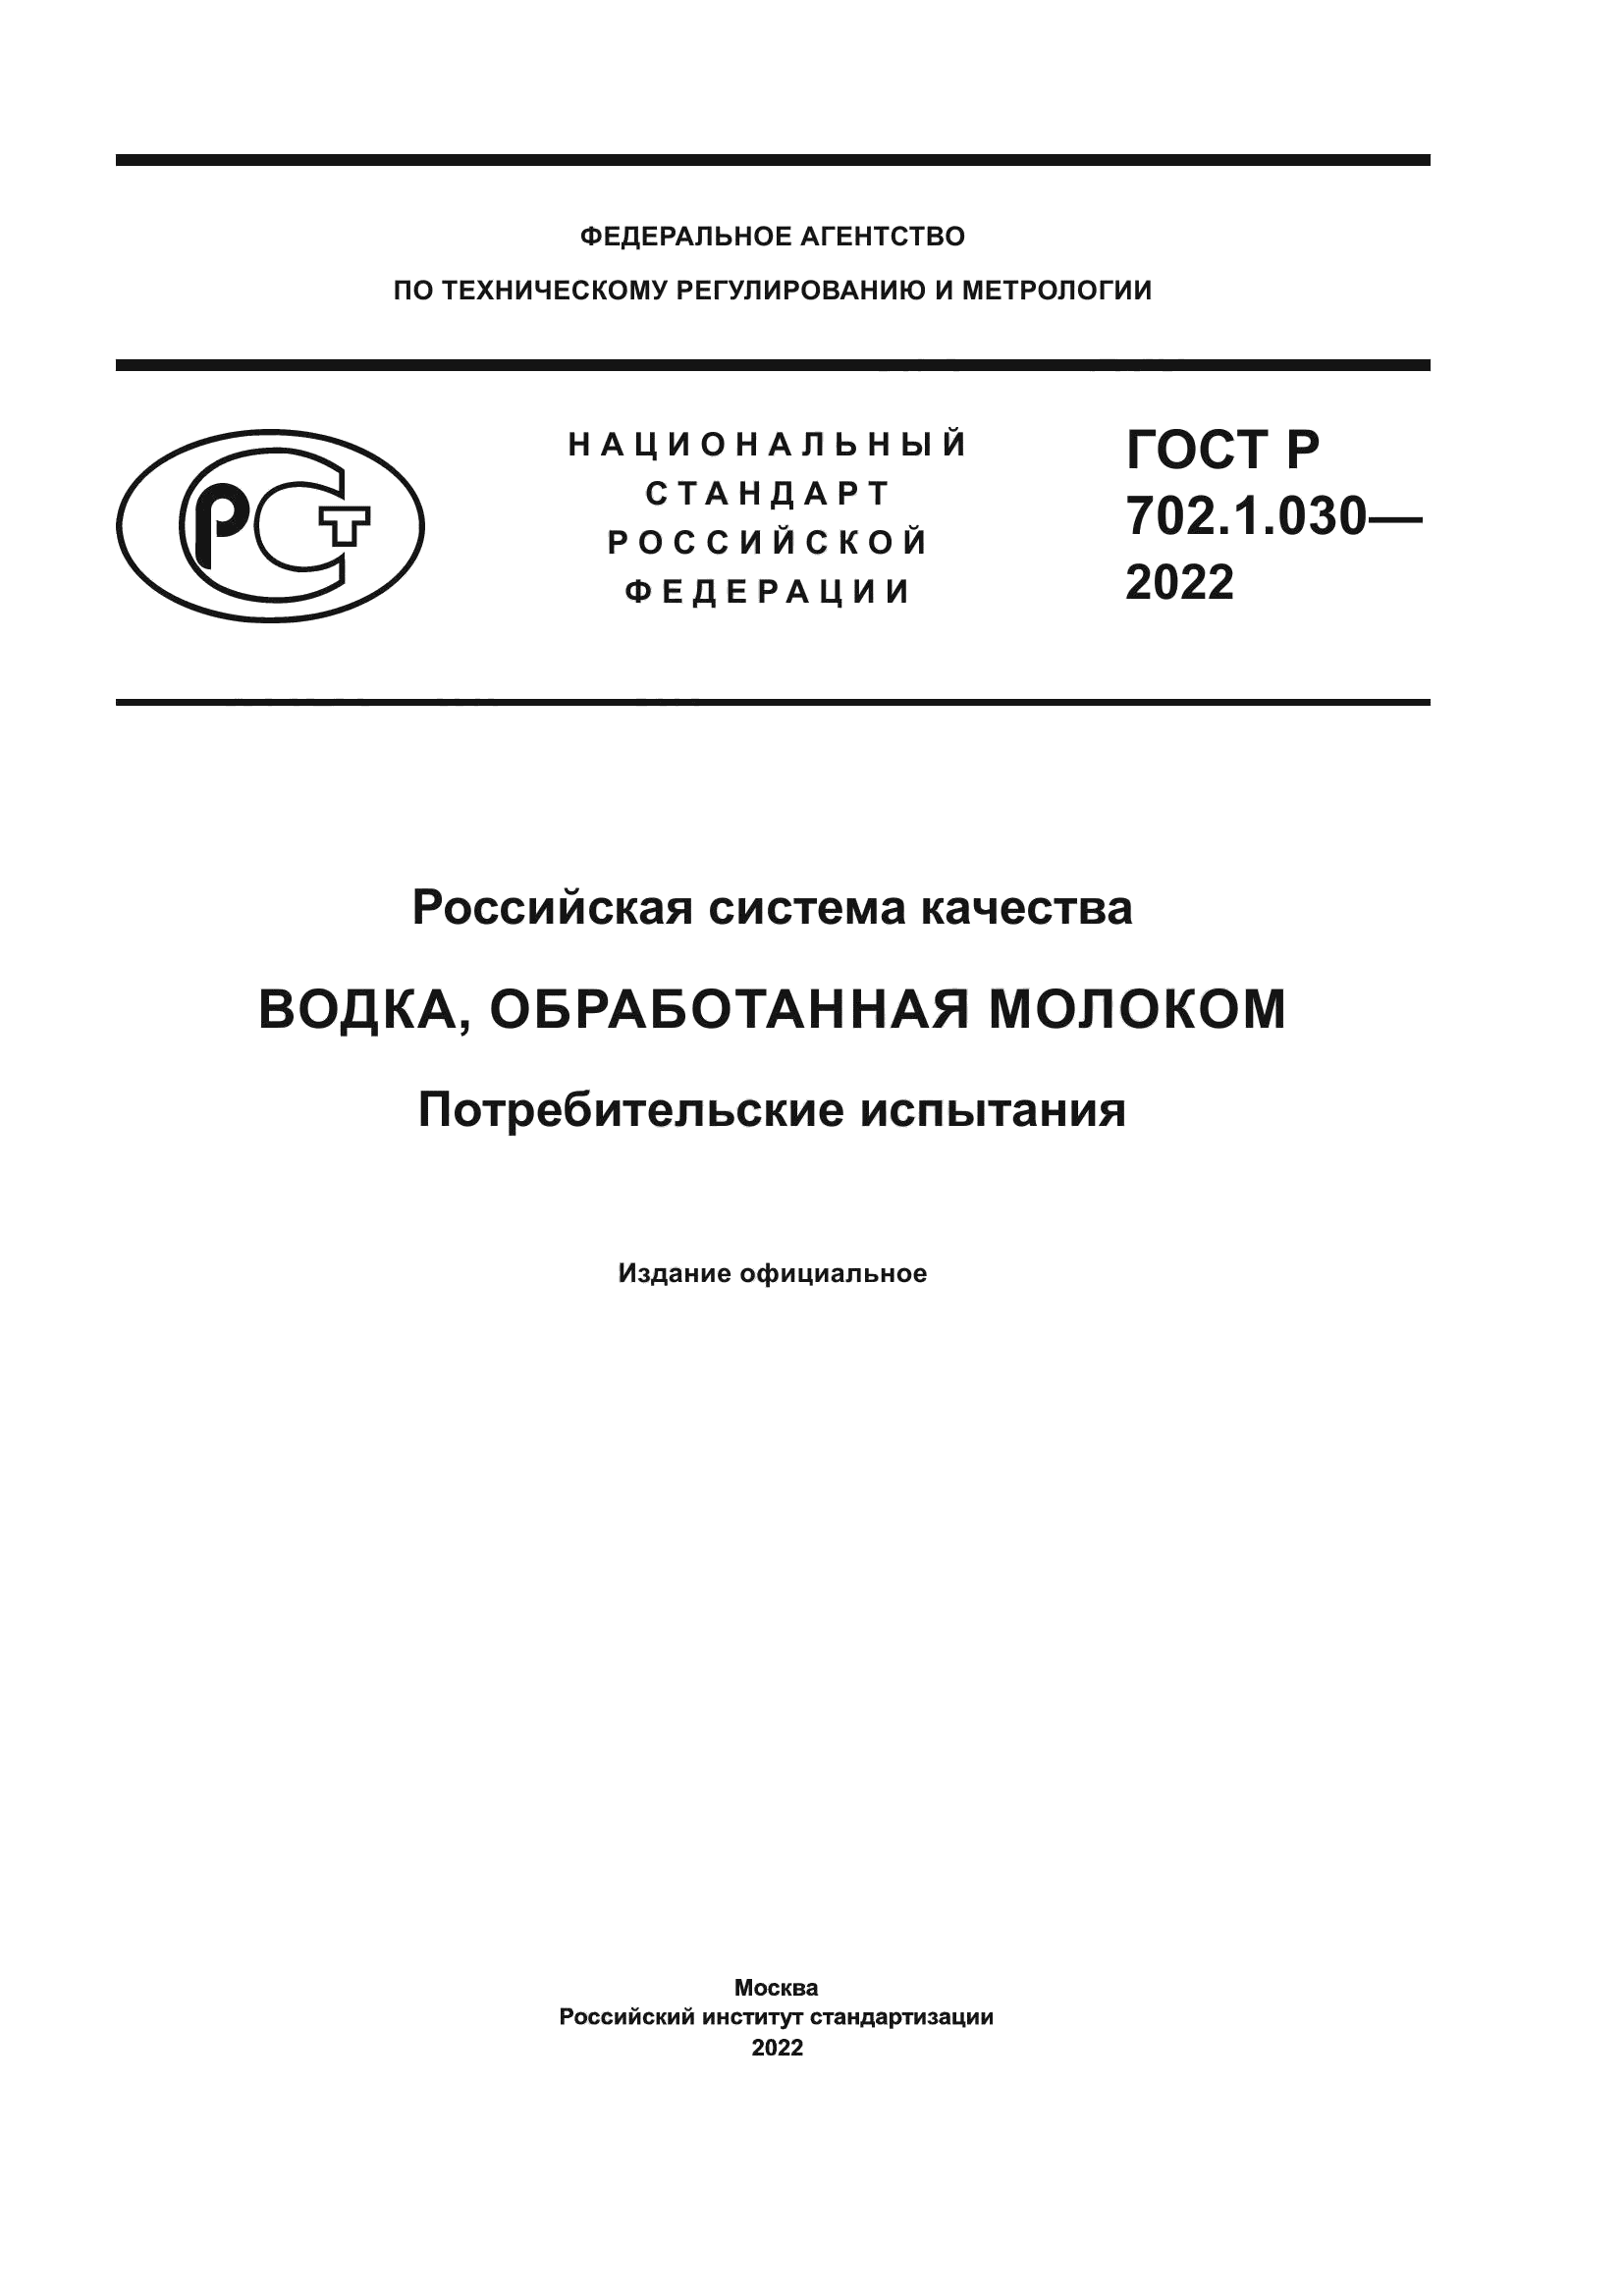 ГОСТ Р 702.1.030-2022